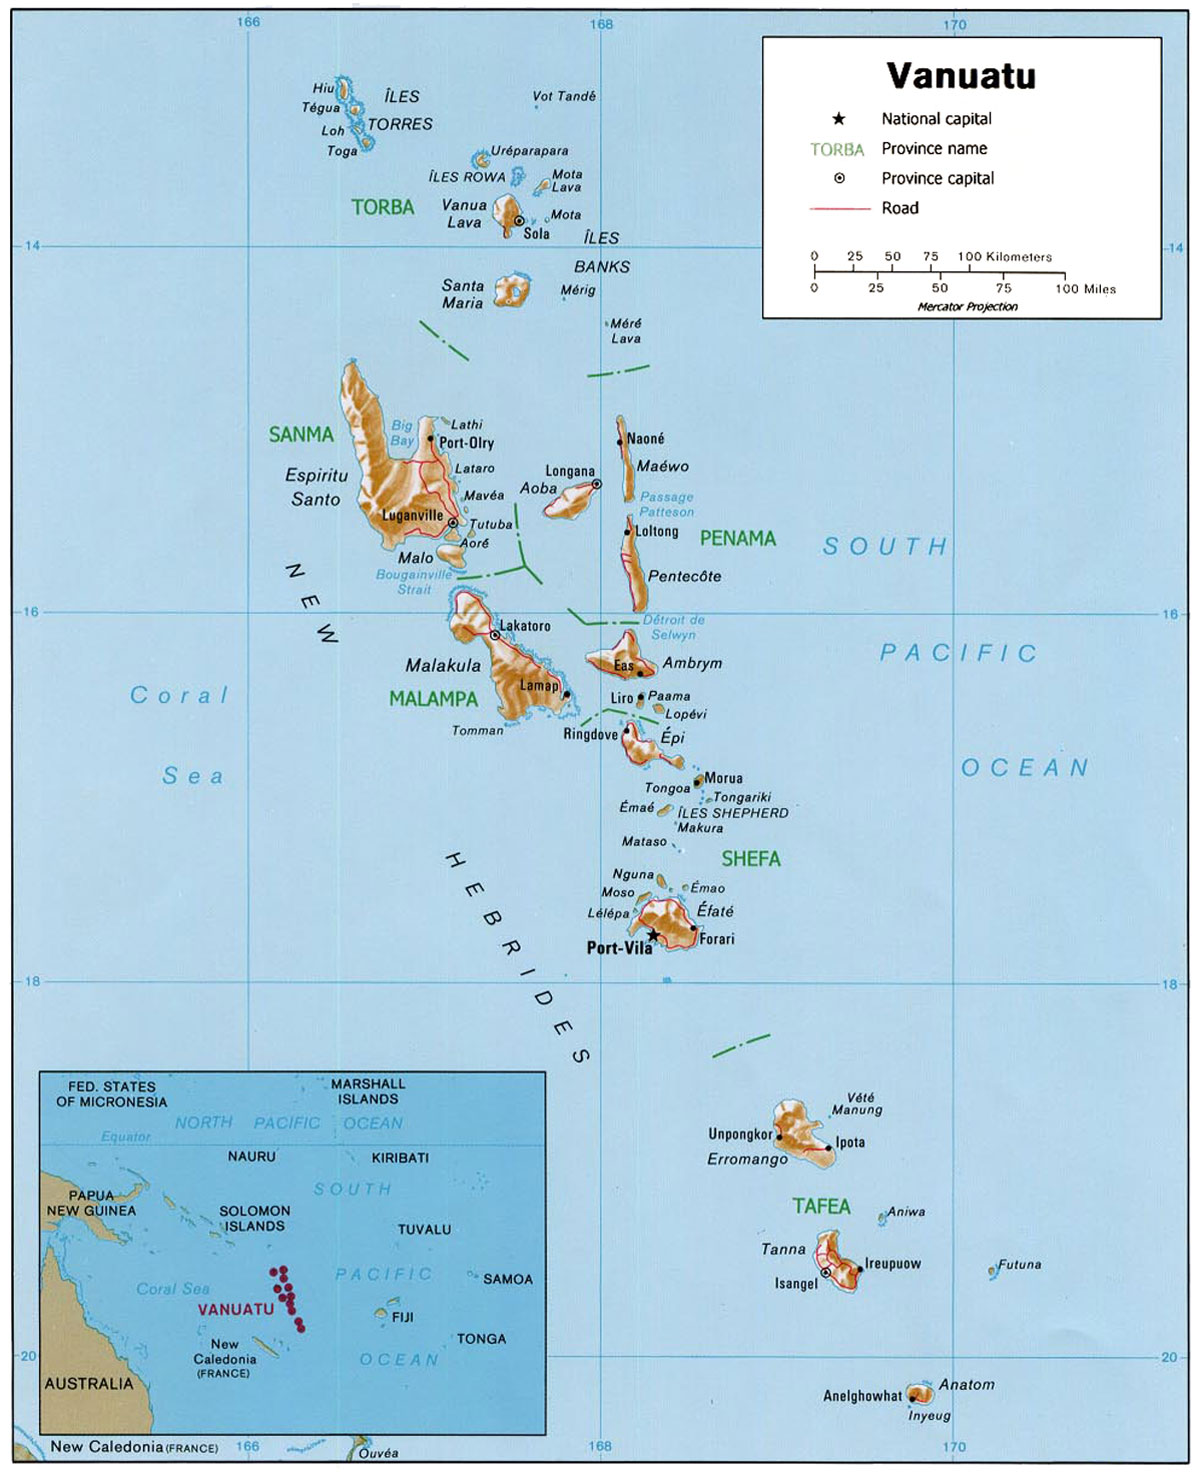 Administrative Map of Vanuatu